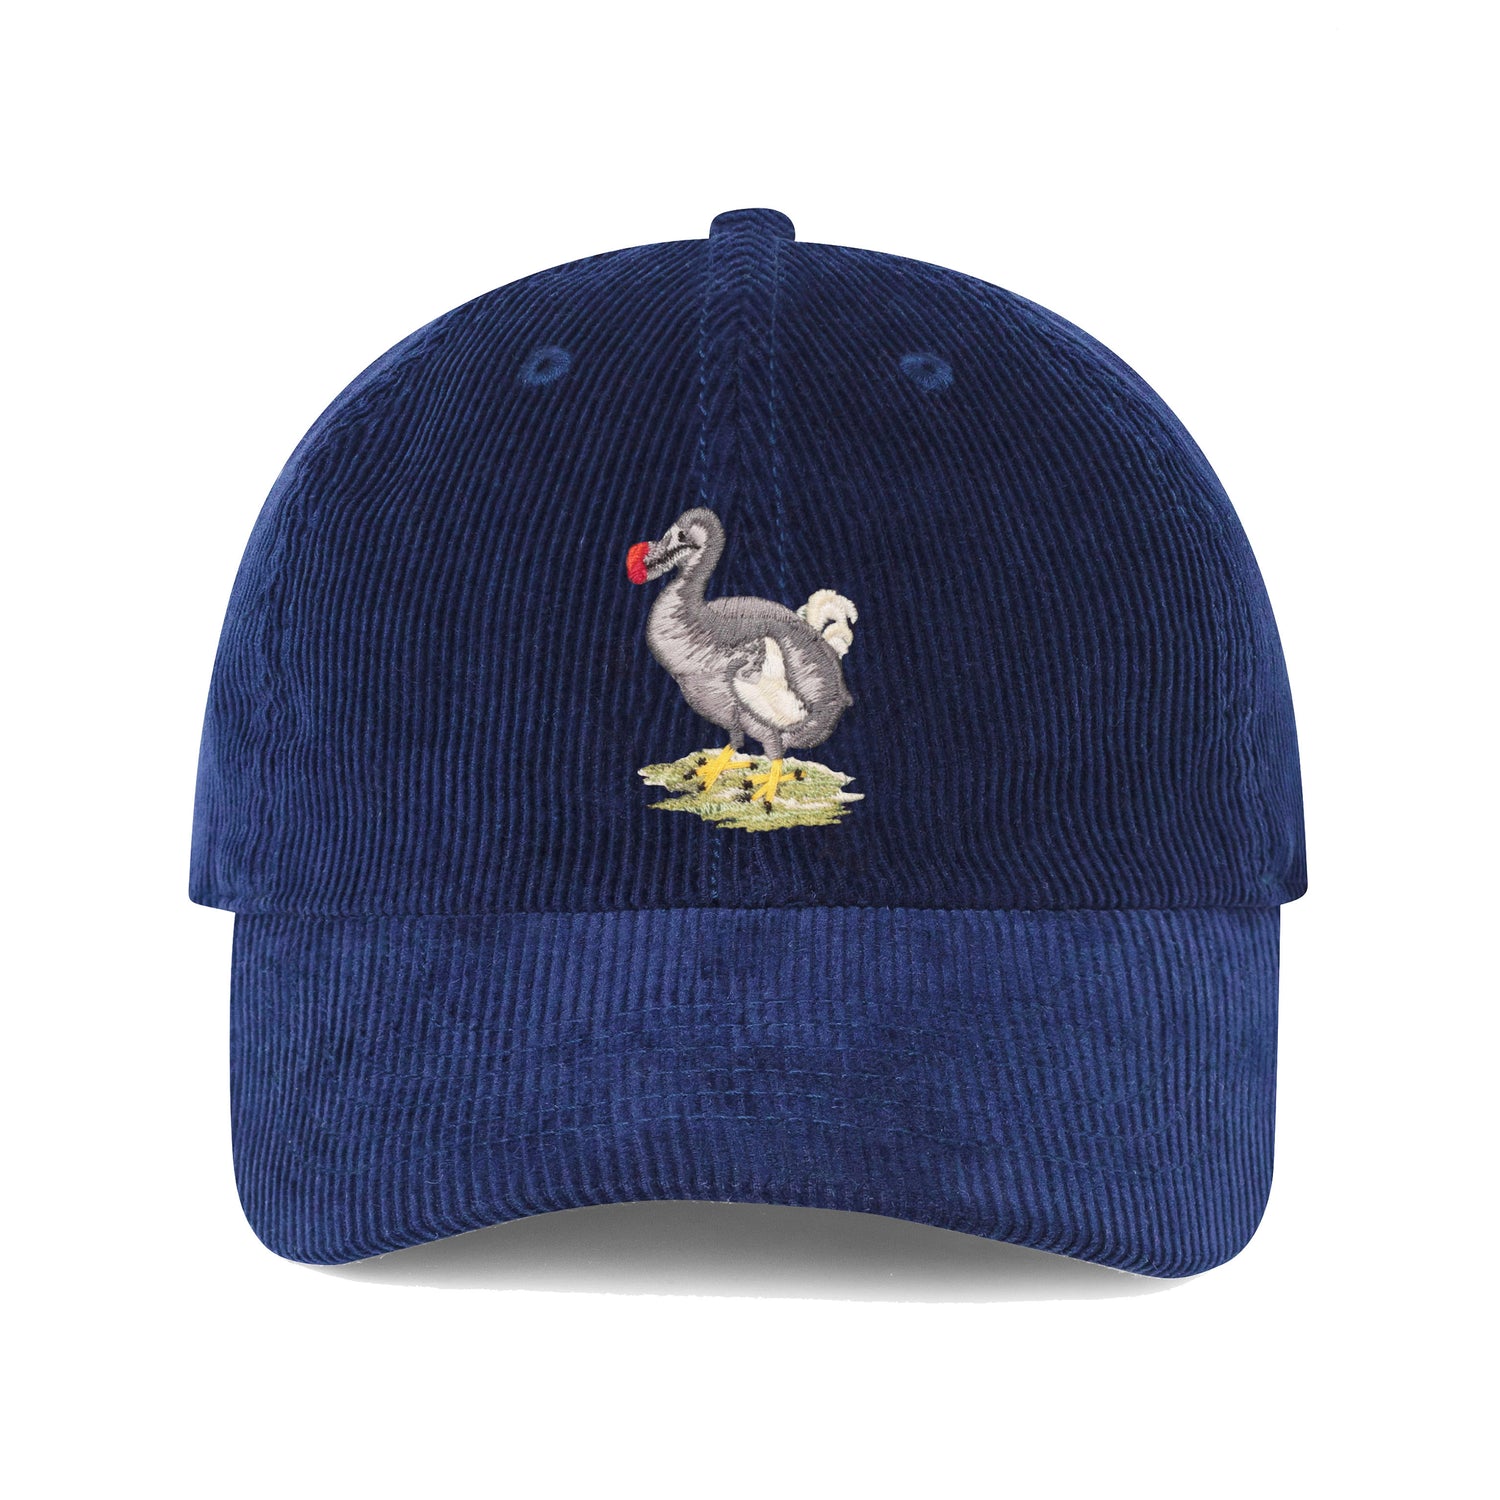 Navy corduroy hat with with satin-stitched dodo bird motif.